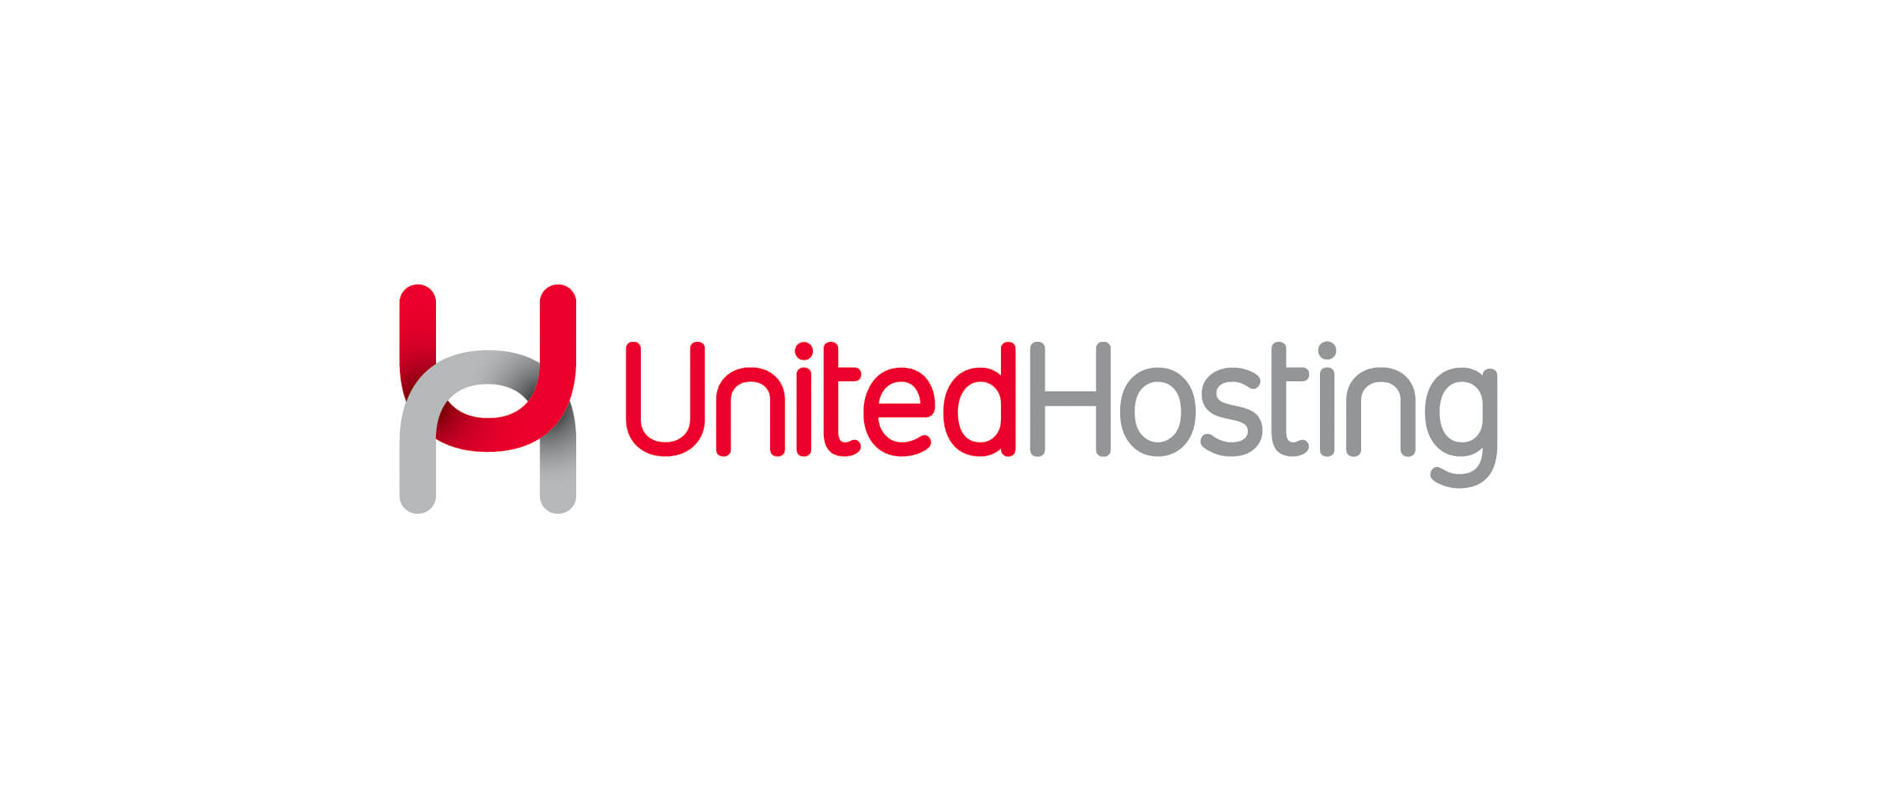 united hosting logo